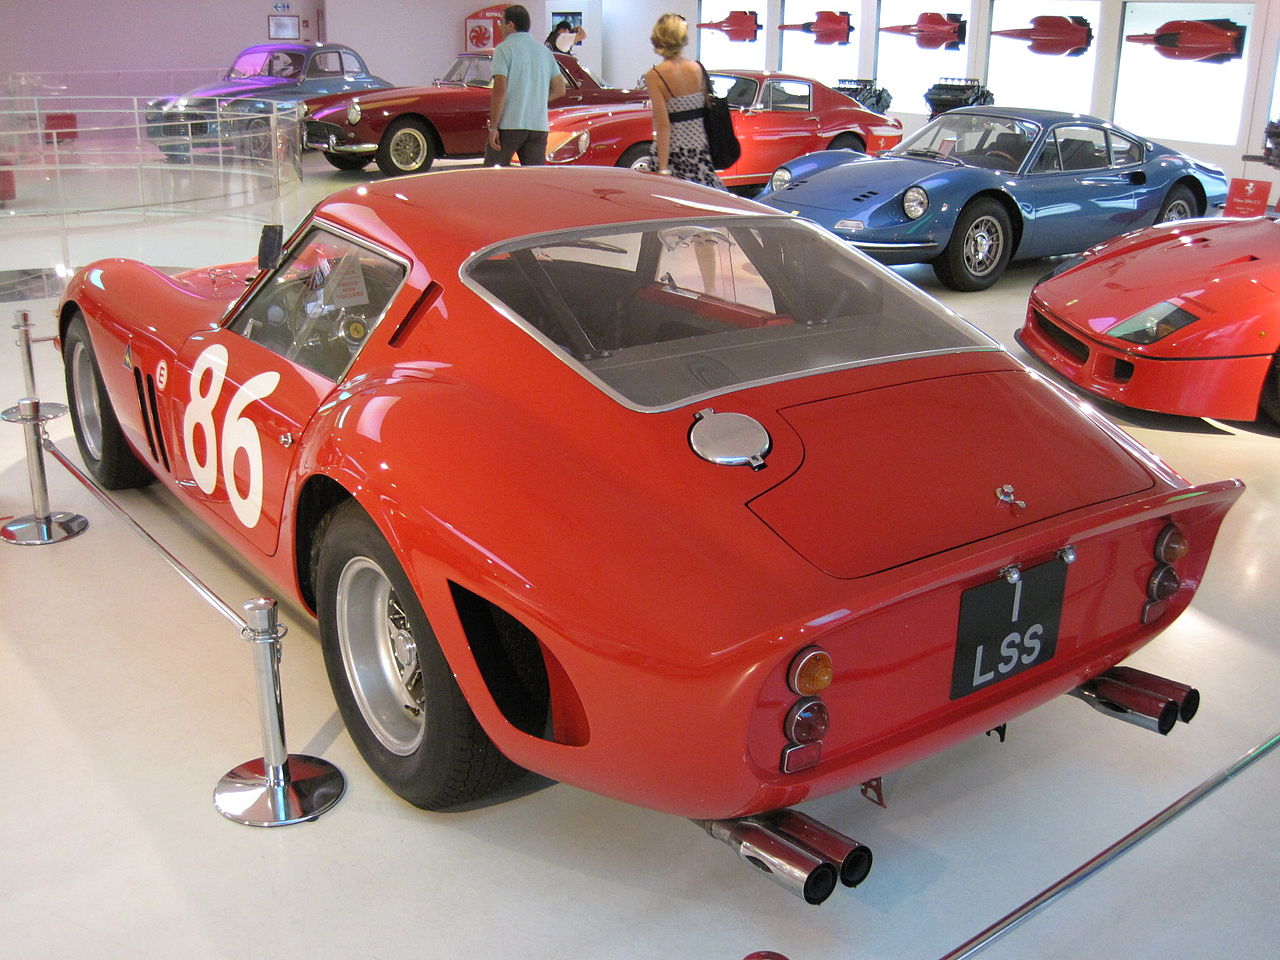 1962 Ferrari 250 GTO Series I at the Ferrari museum 